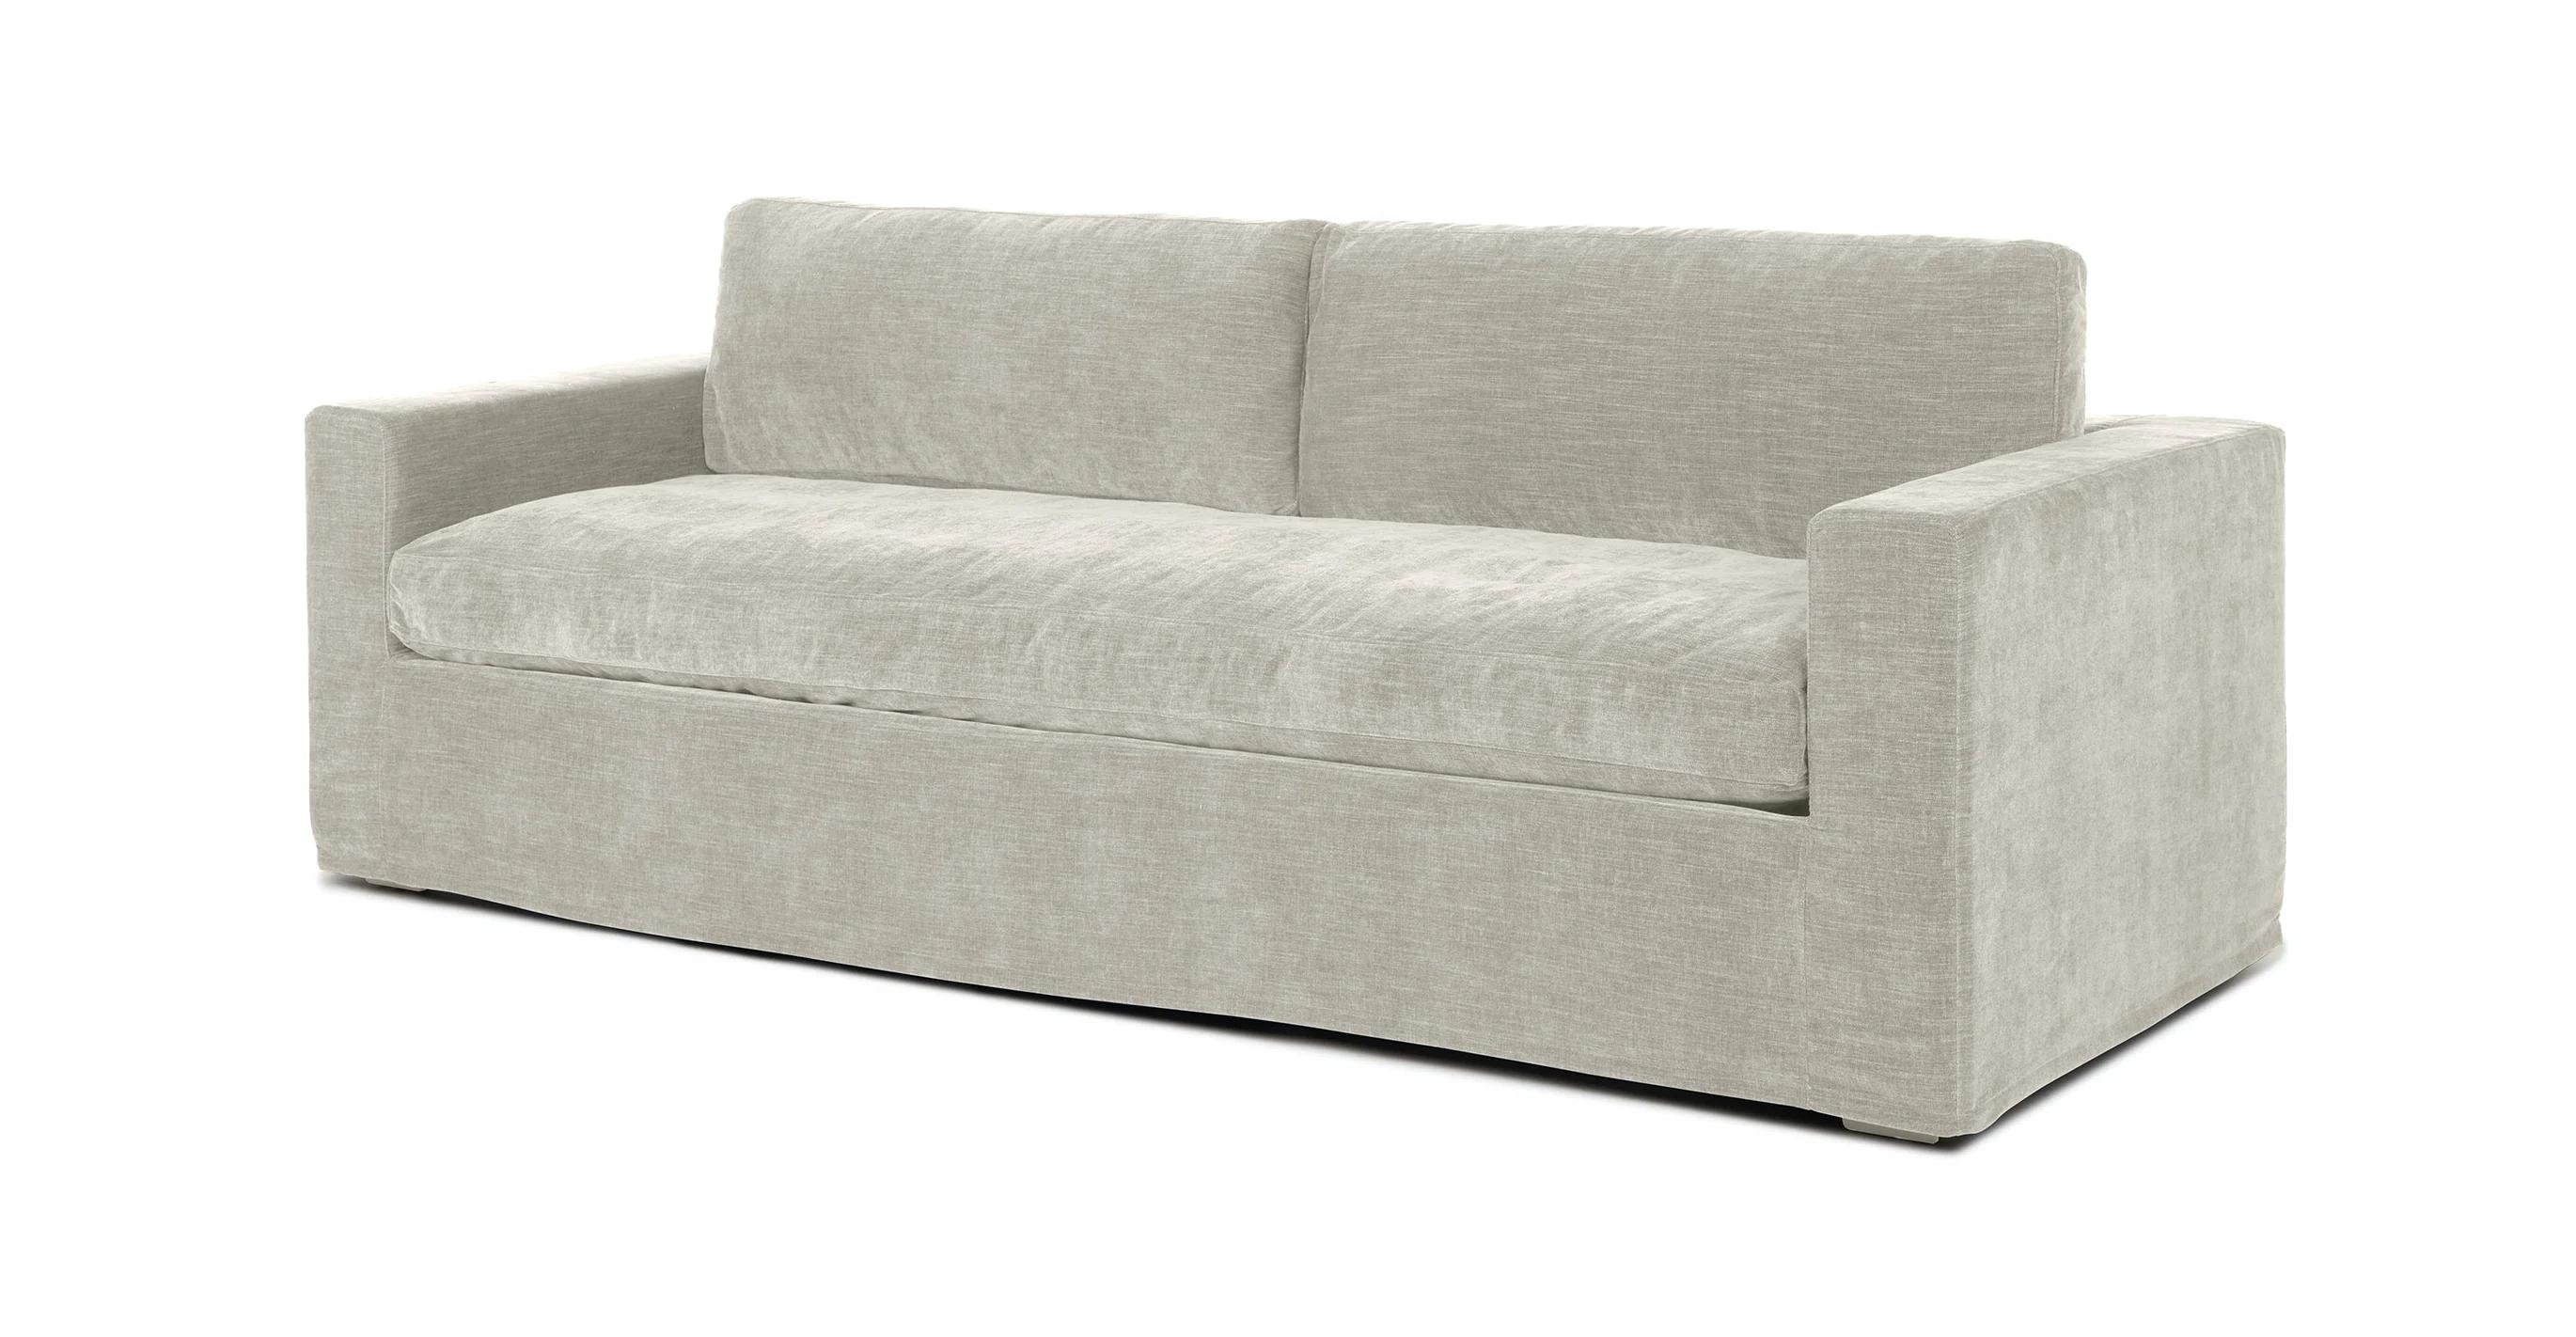 Alzey Slipcover Sofa, Whistle Gray - Image 1